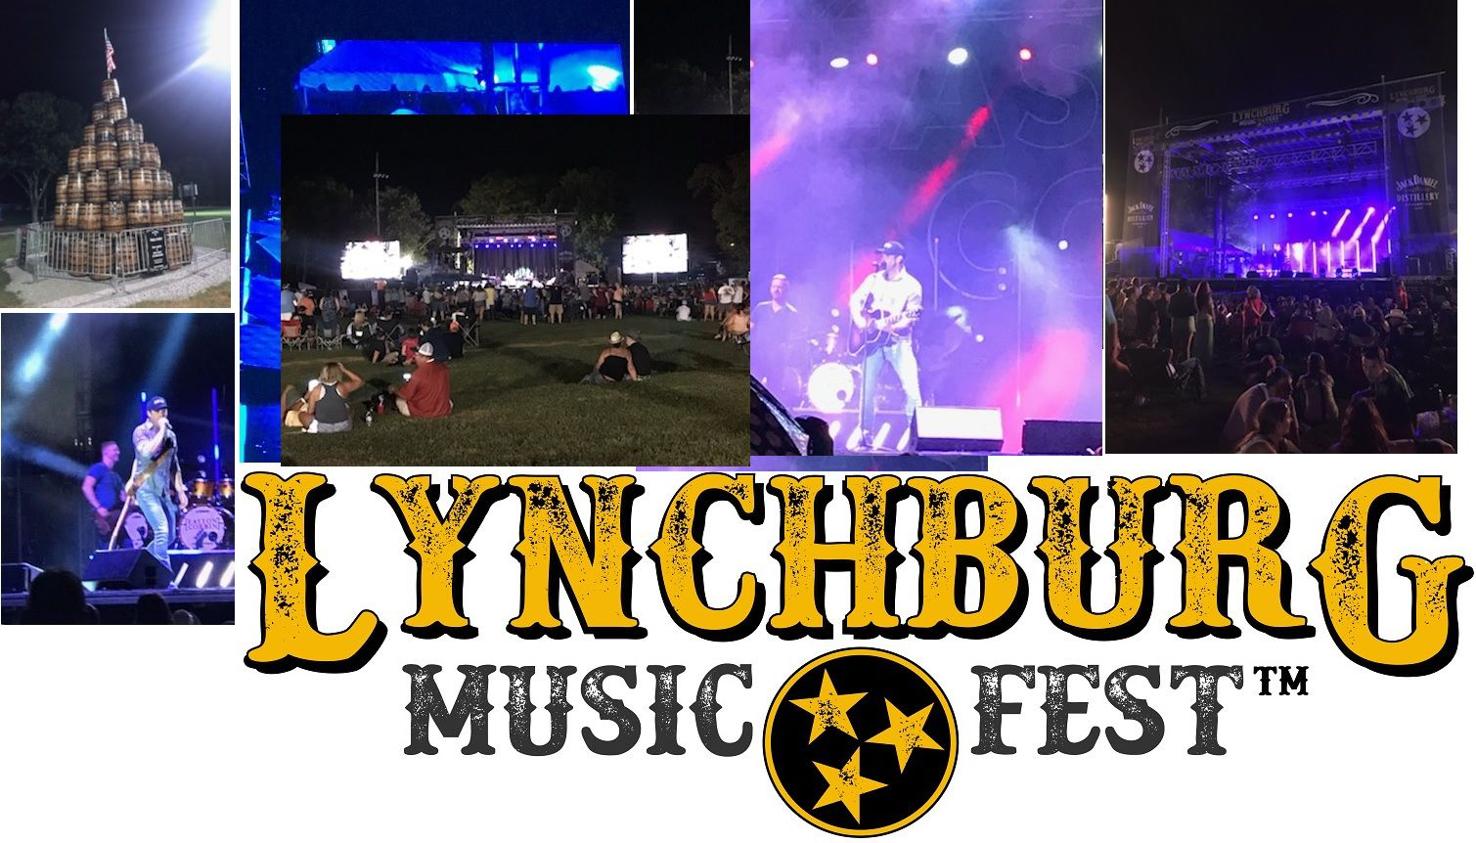 A glimpse at Lynchburg Music Fest Friday night National News